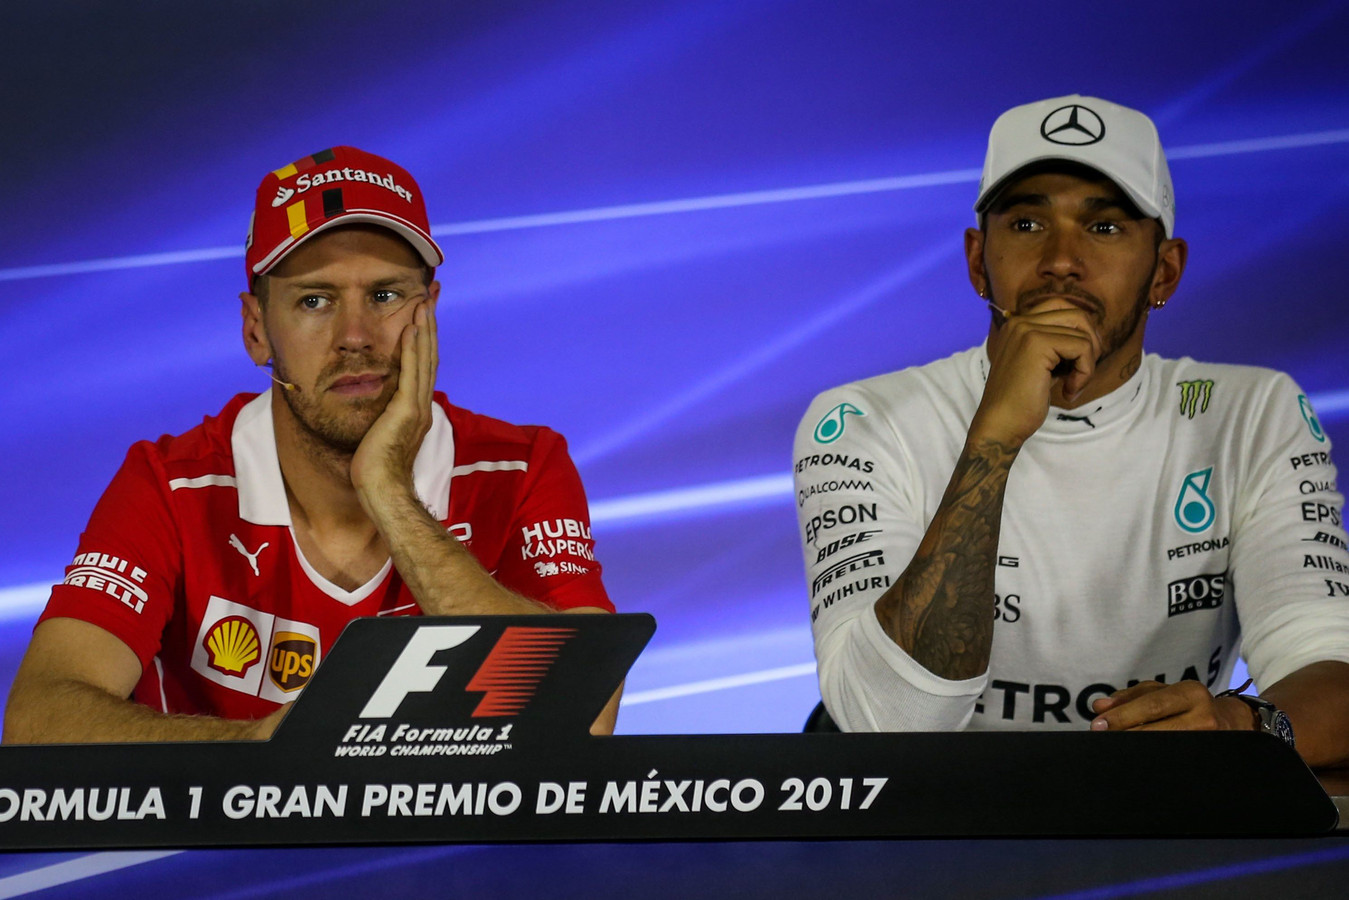 Sebastian Vettel en Lewis Hamilton.